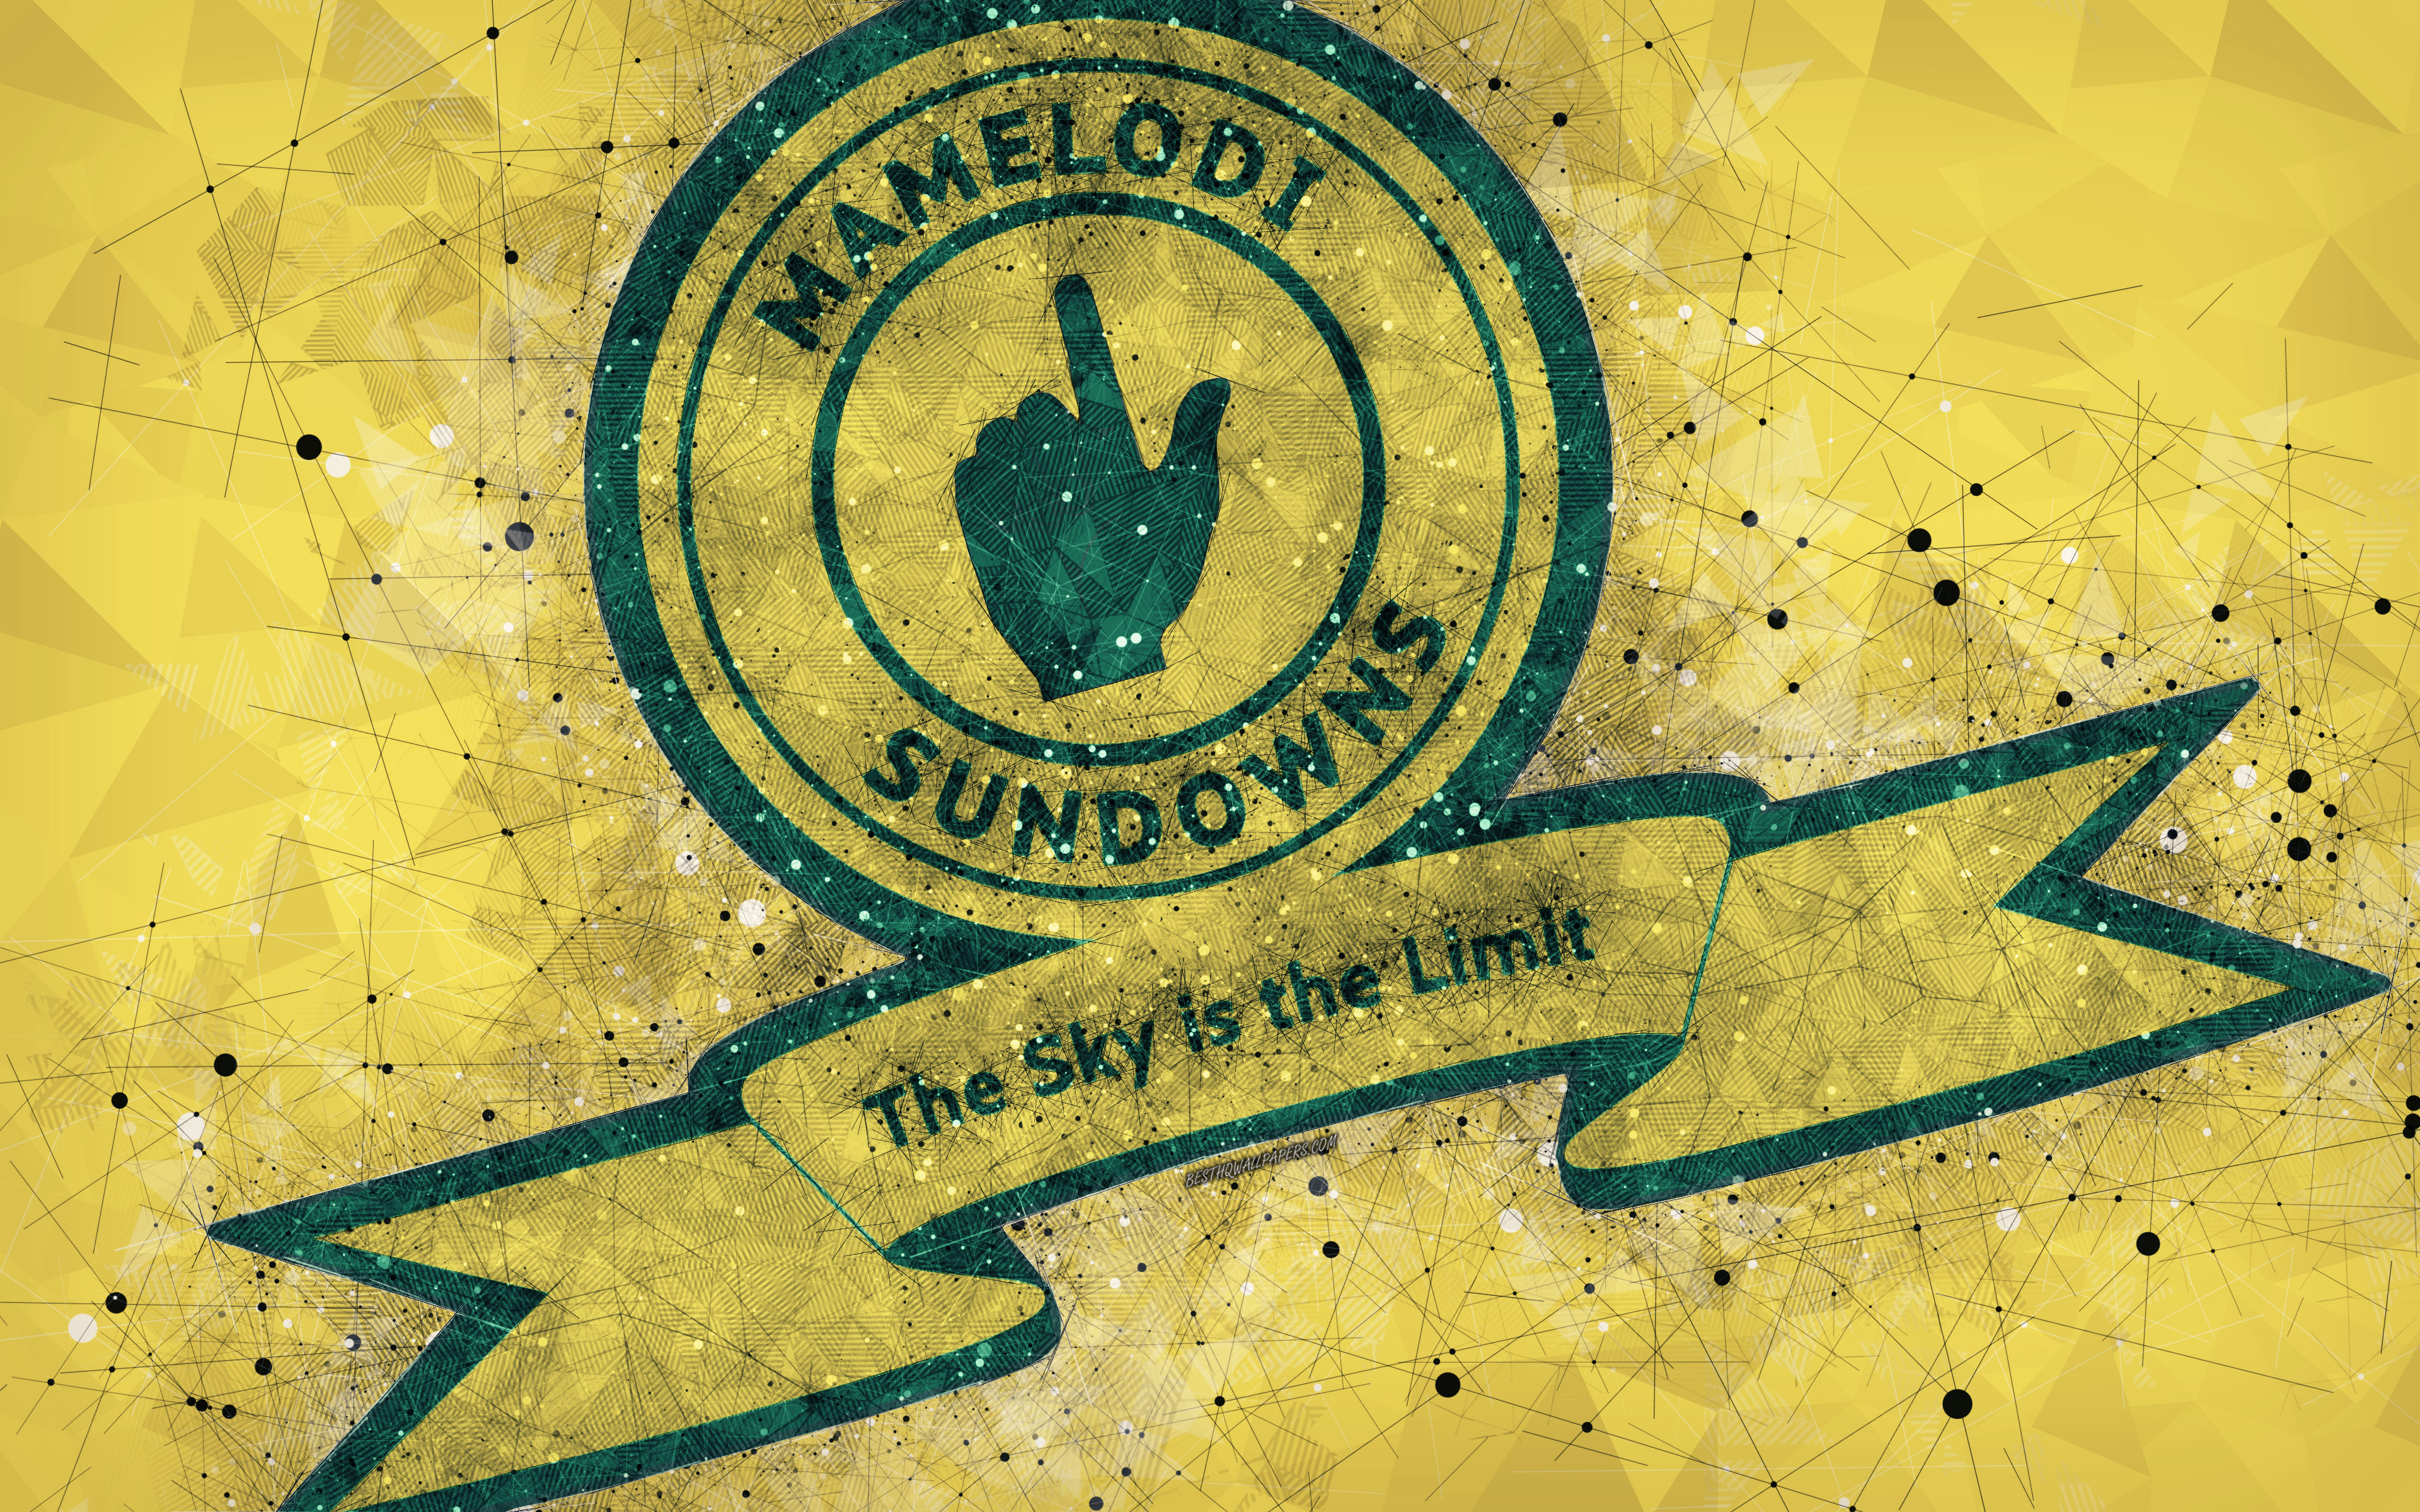 Wallpaper Mamelodi Sundowns Fc 4k Logo Geometric Art